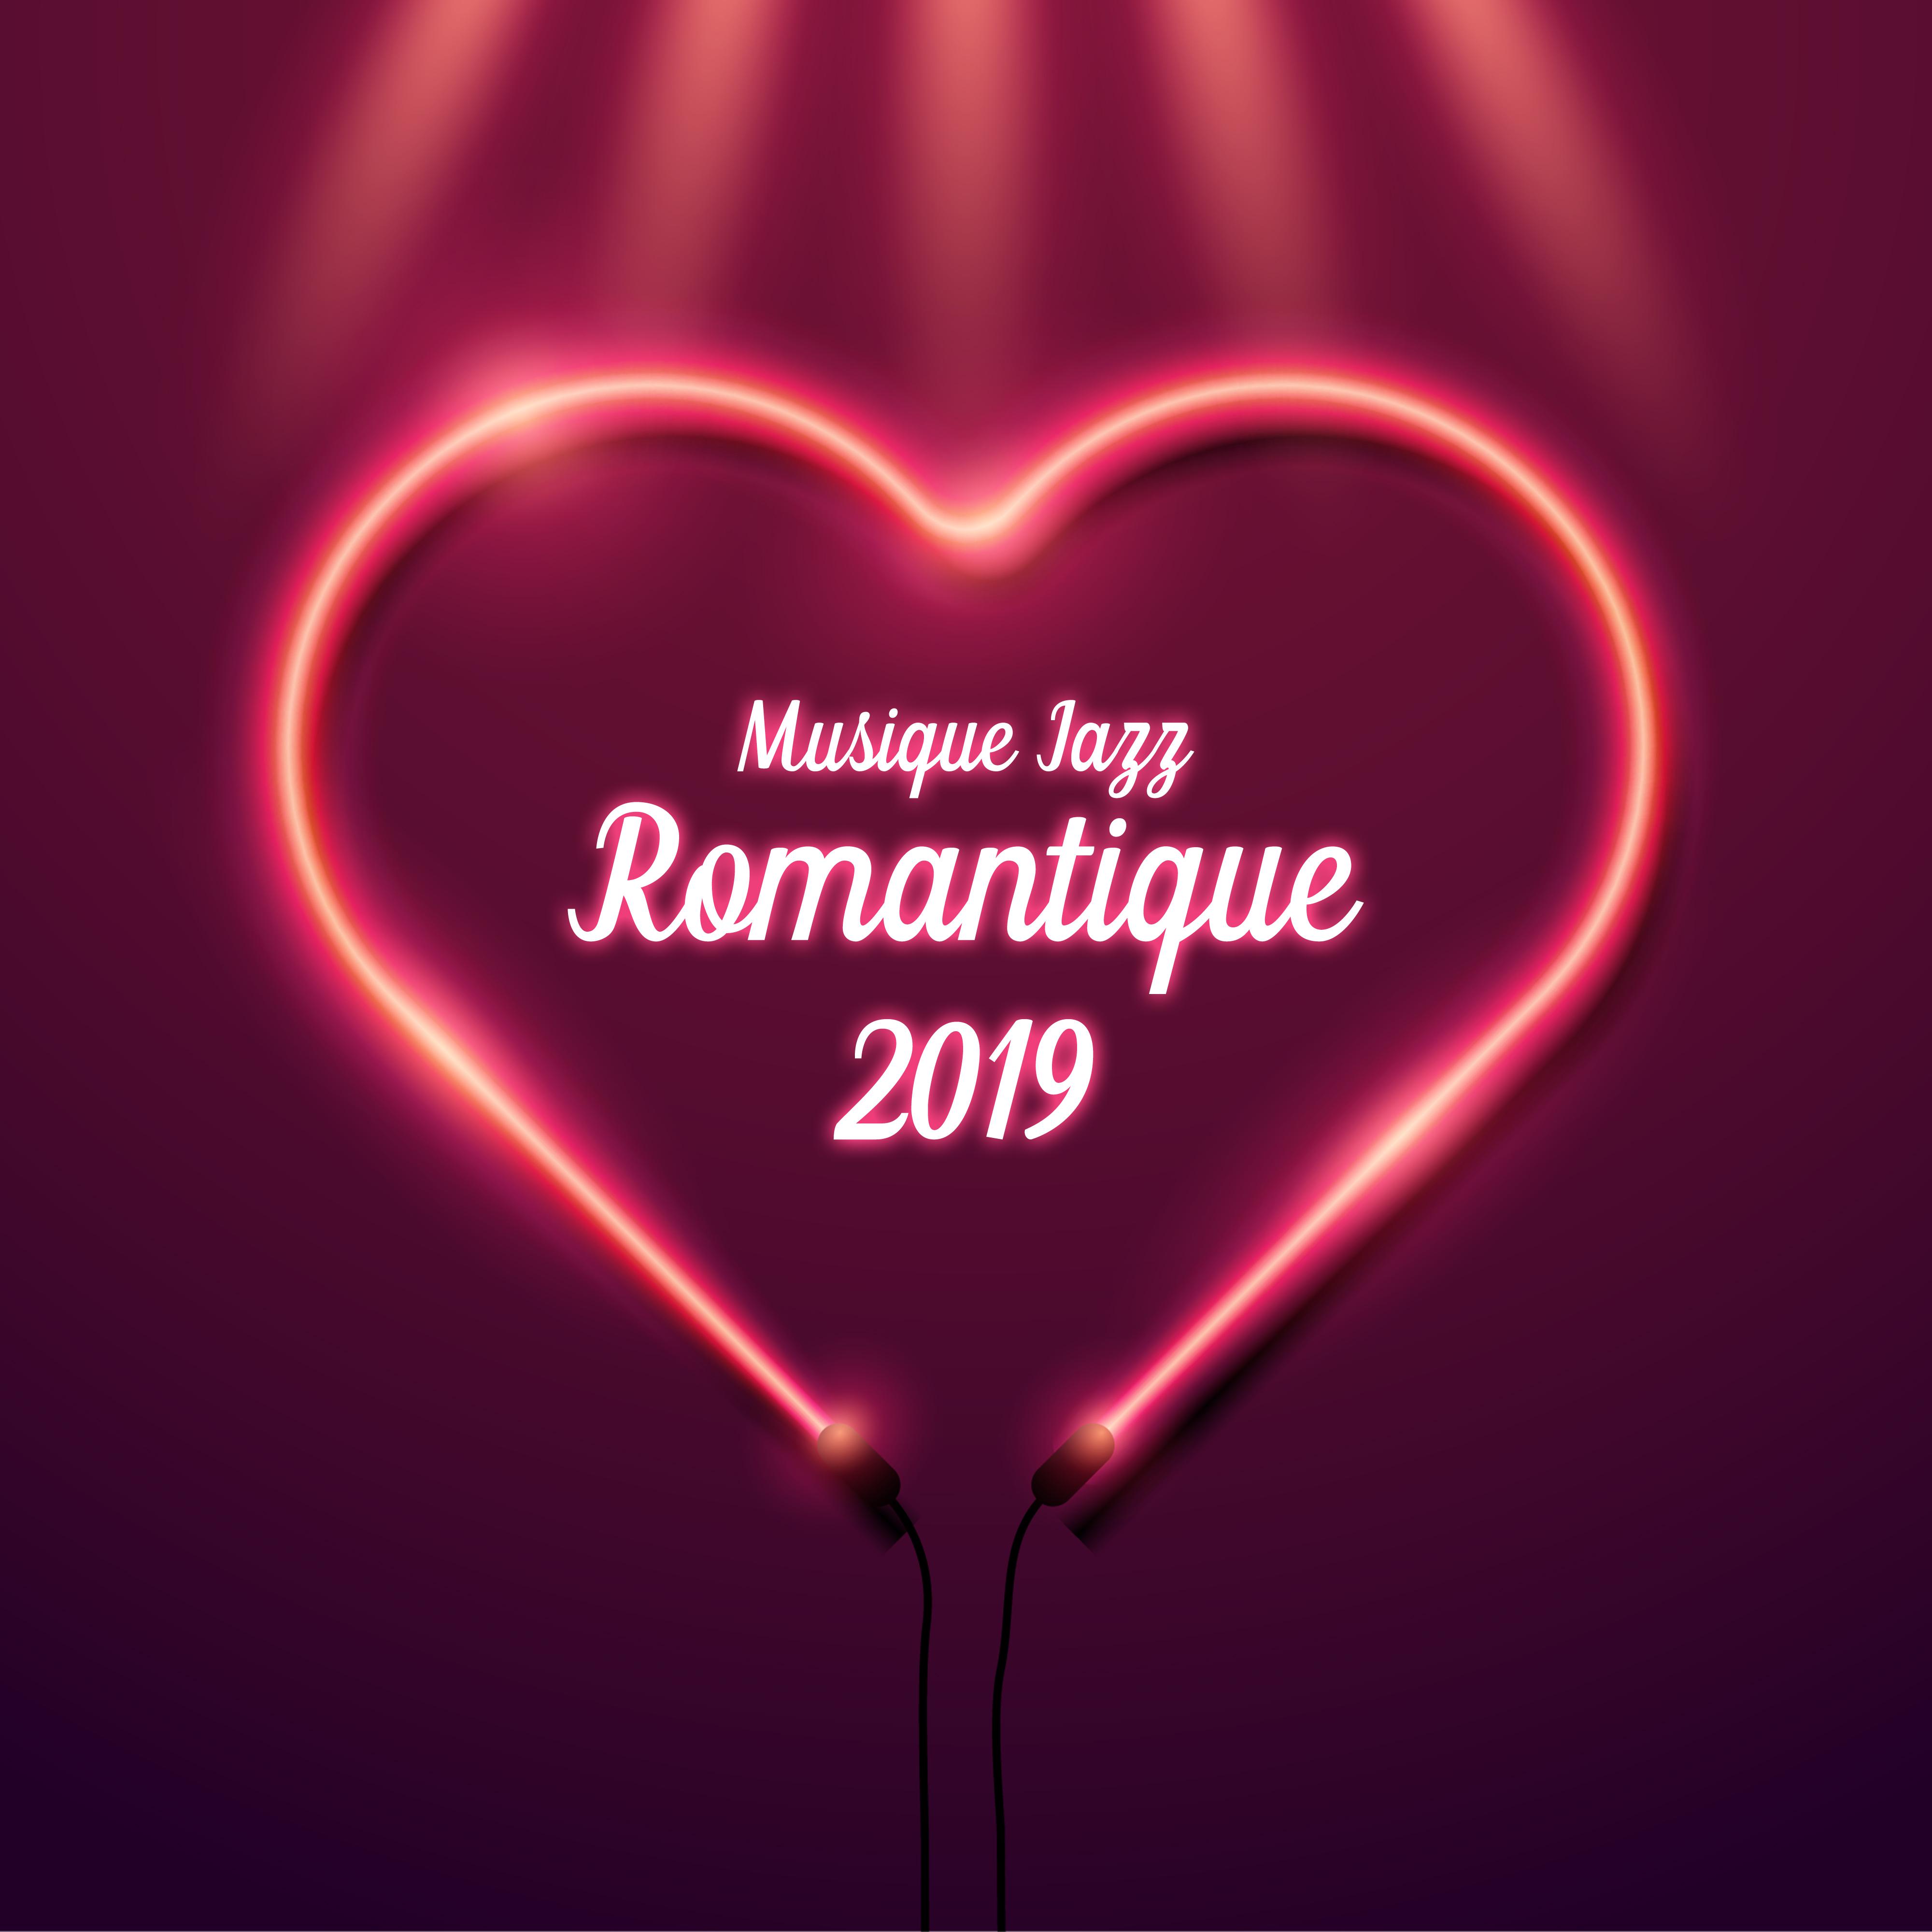 Musique Jazz Romantique 2019